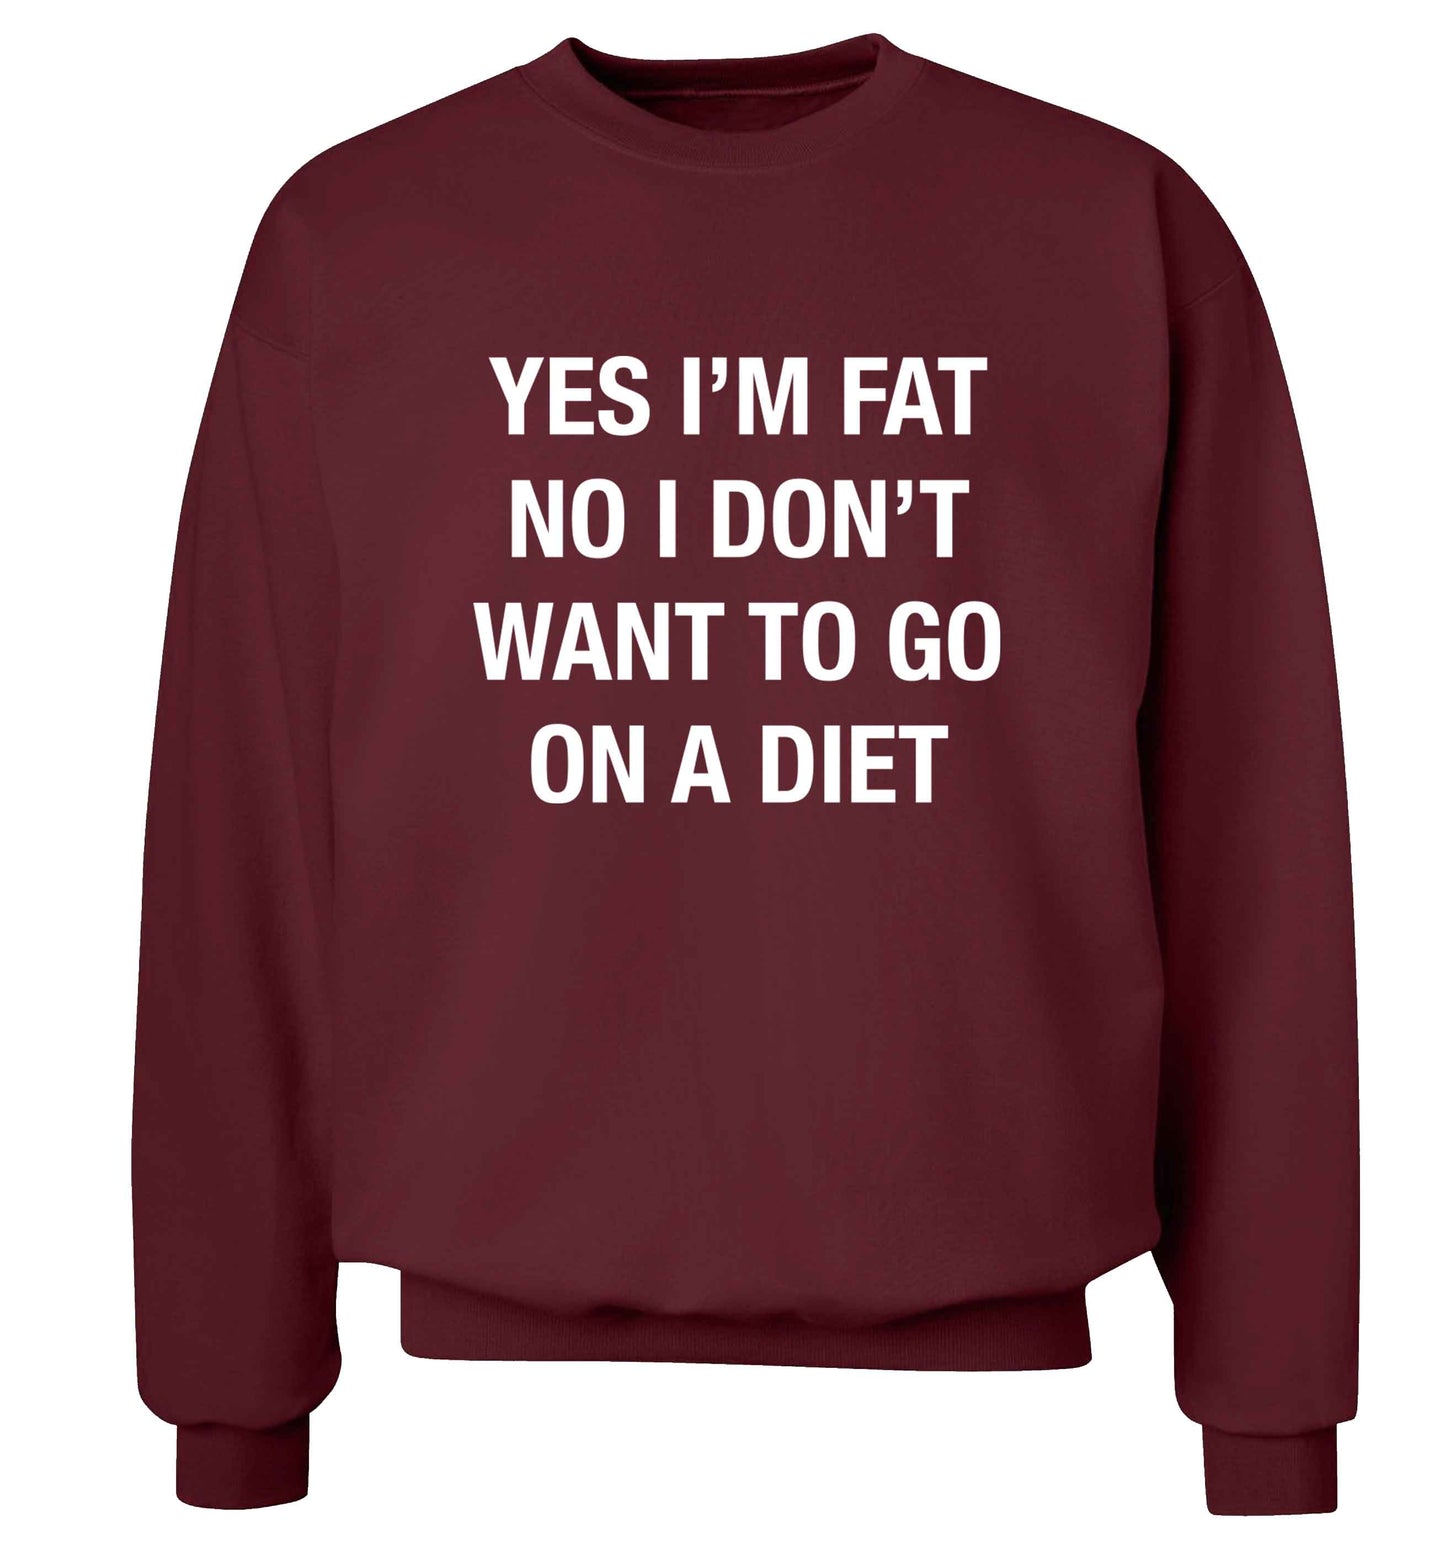 Yes I'm fat, no I don't want to go on a diet adult's unisex maroon sweater 2XL